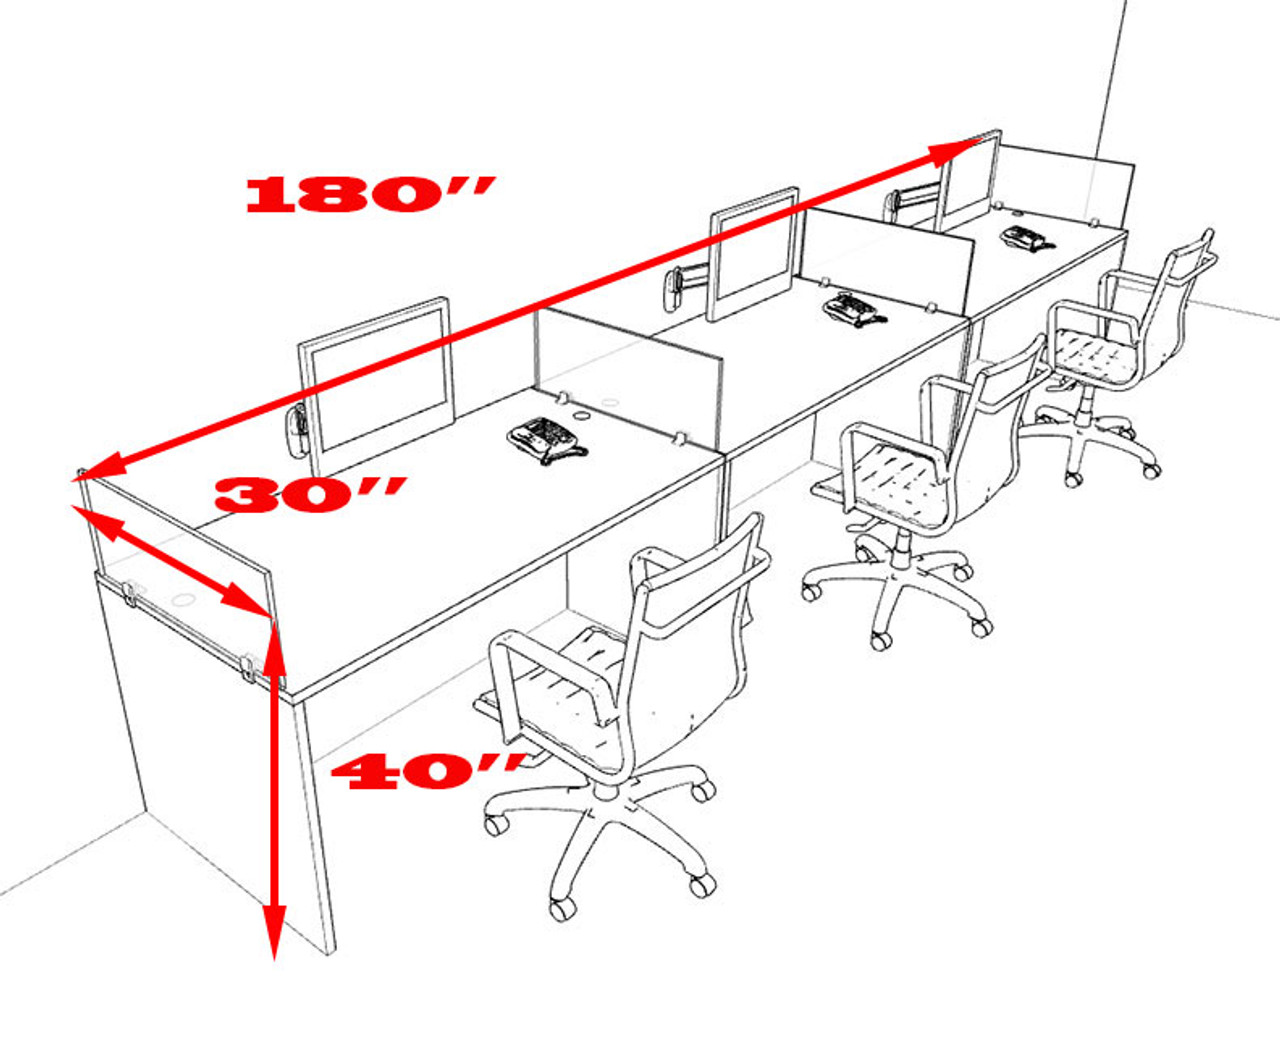 Three Person Modern Accoustic Divider Office Workstation Desk Set, #OT-SUL-SPRB8